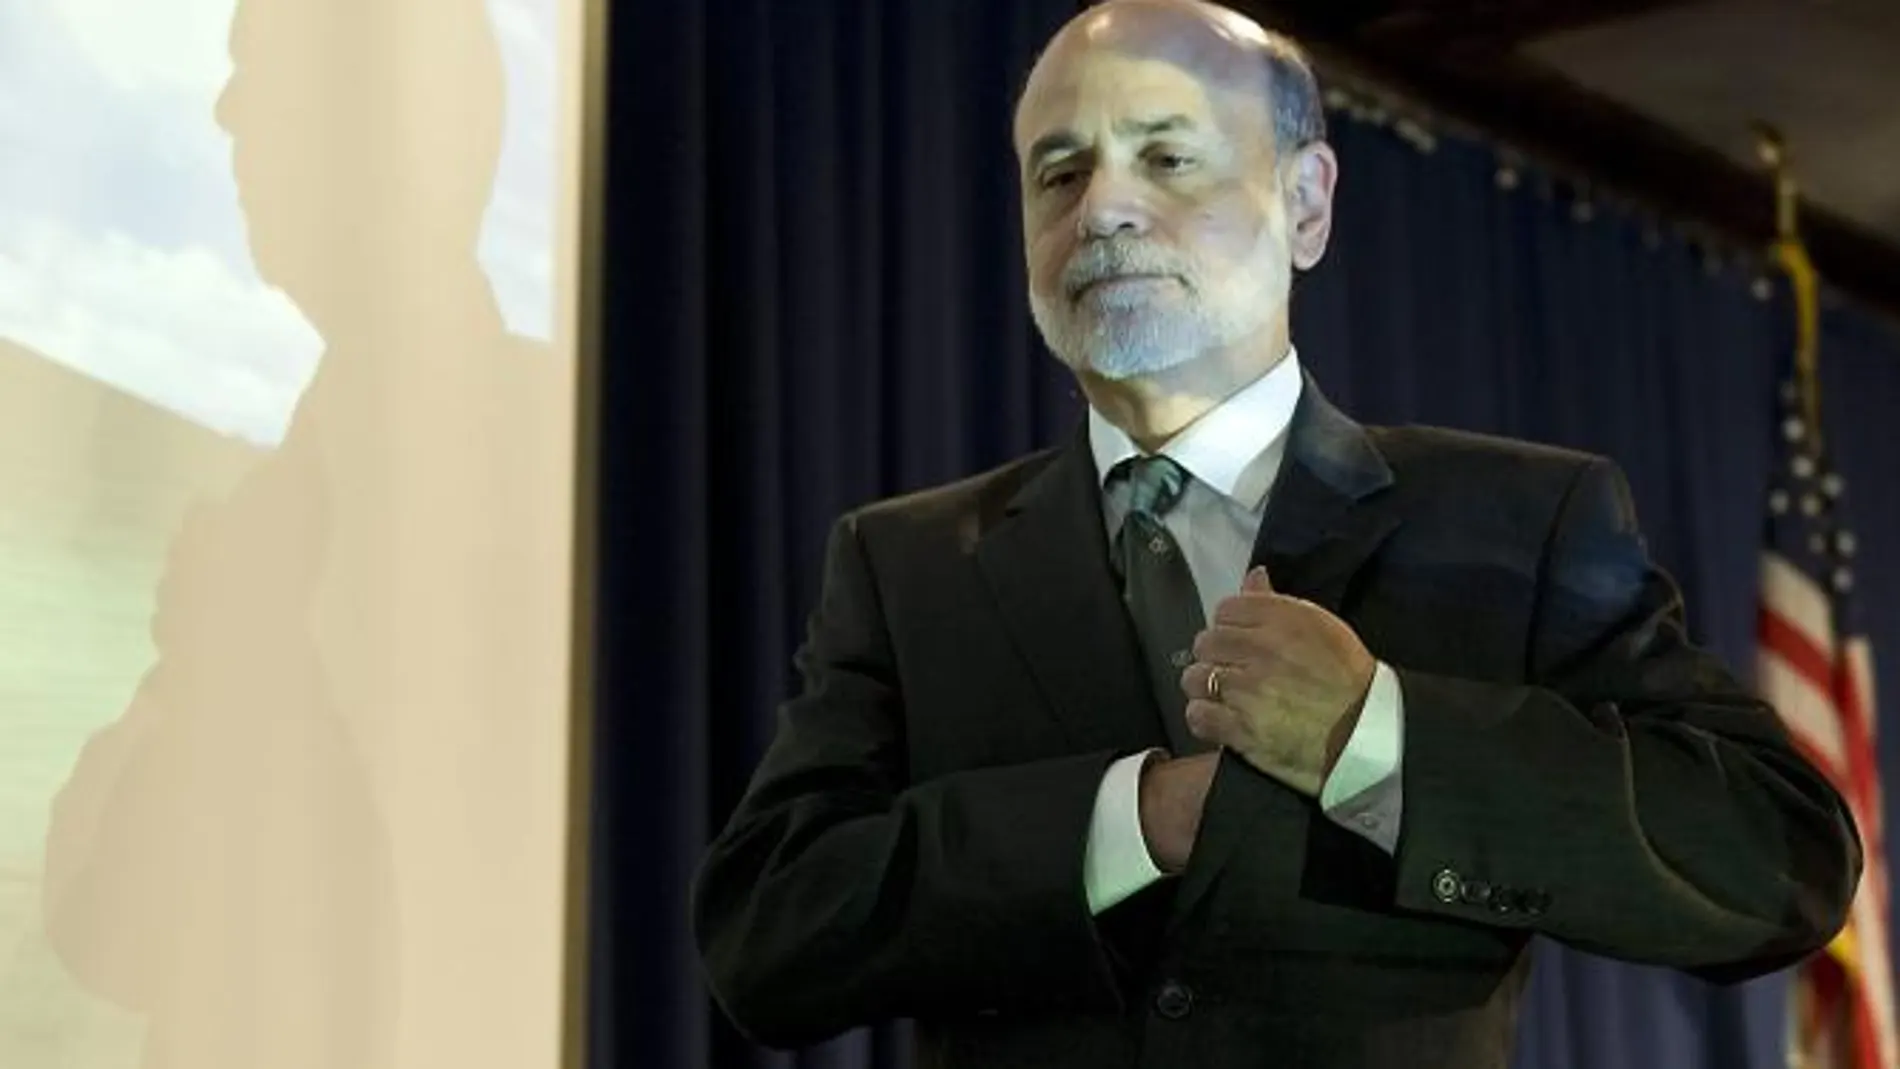 El presidente de la Reserva Federal (Fed), Ben Bernanke